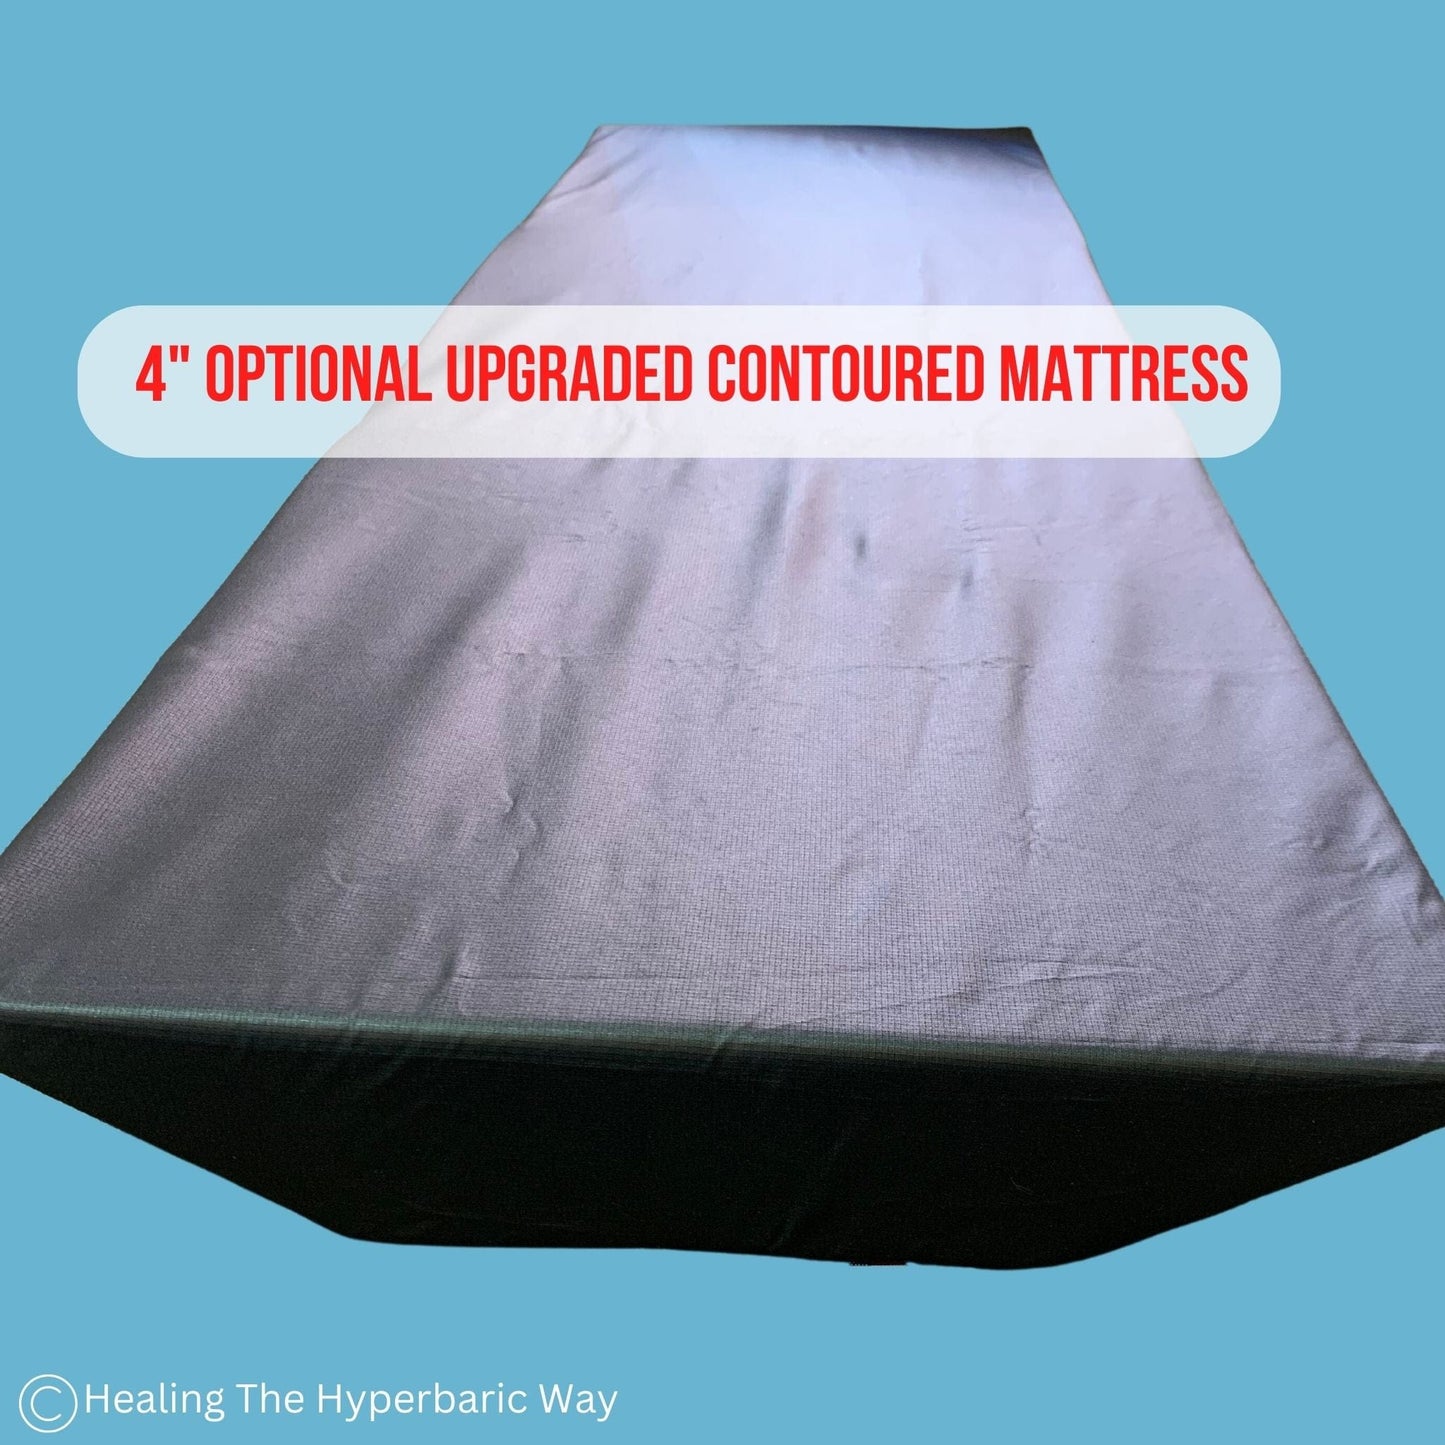 4" Contoured Mattress Upgrade 